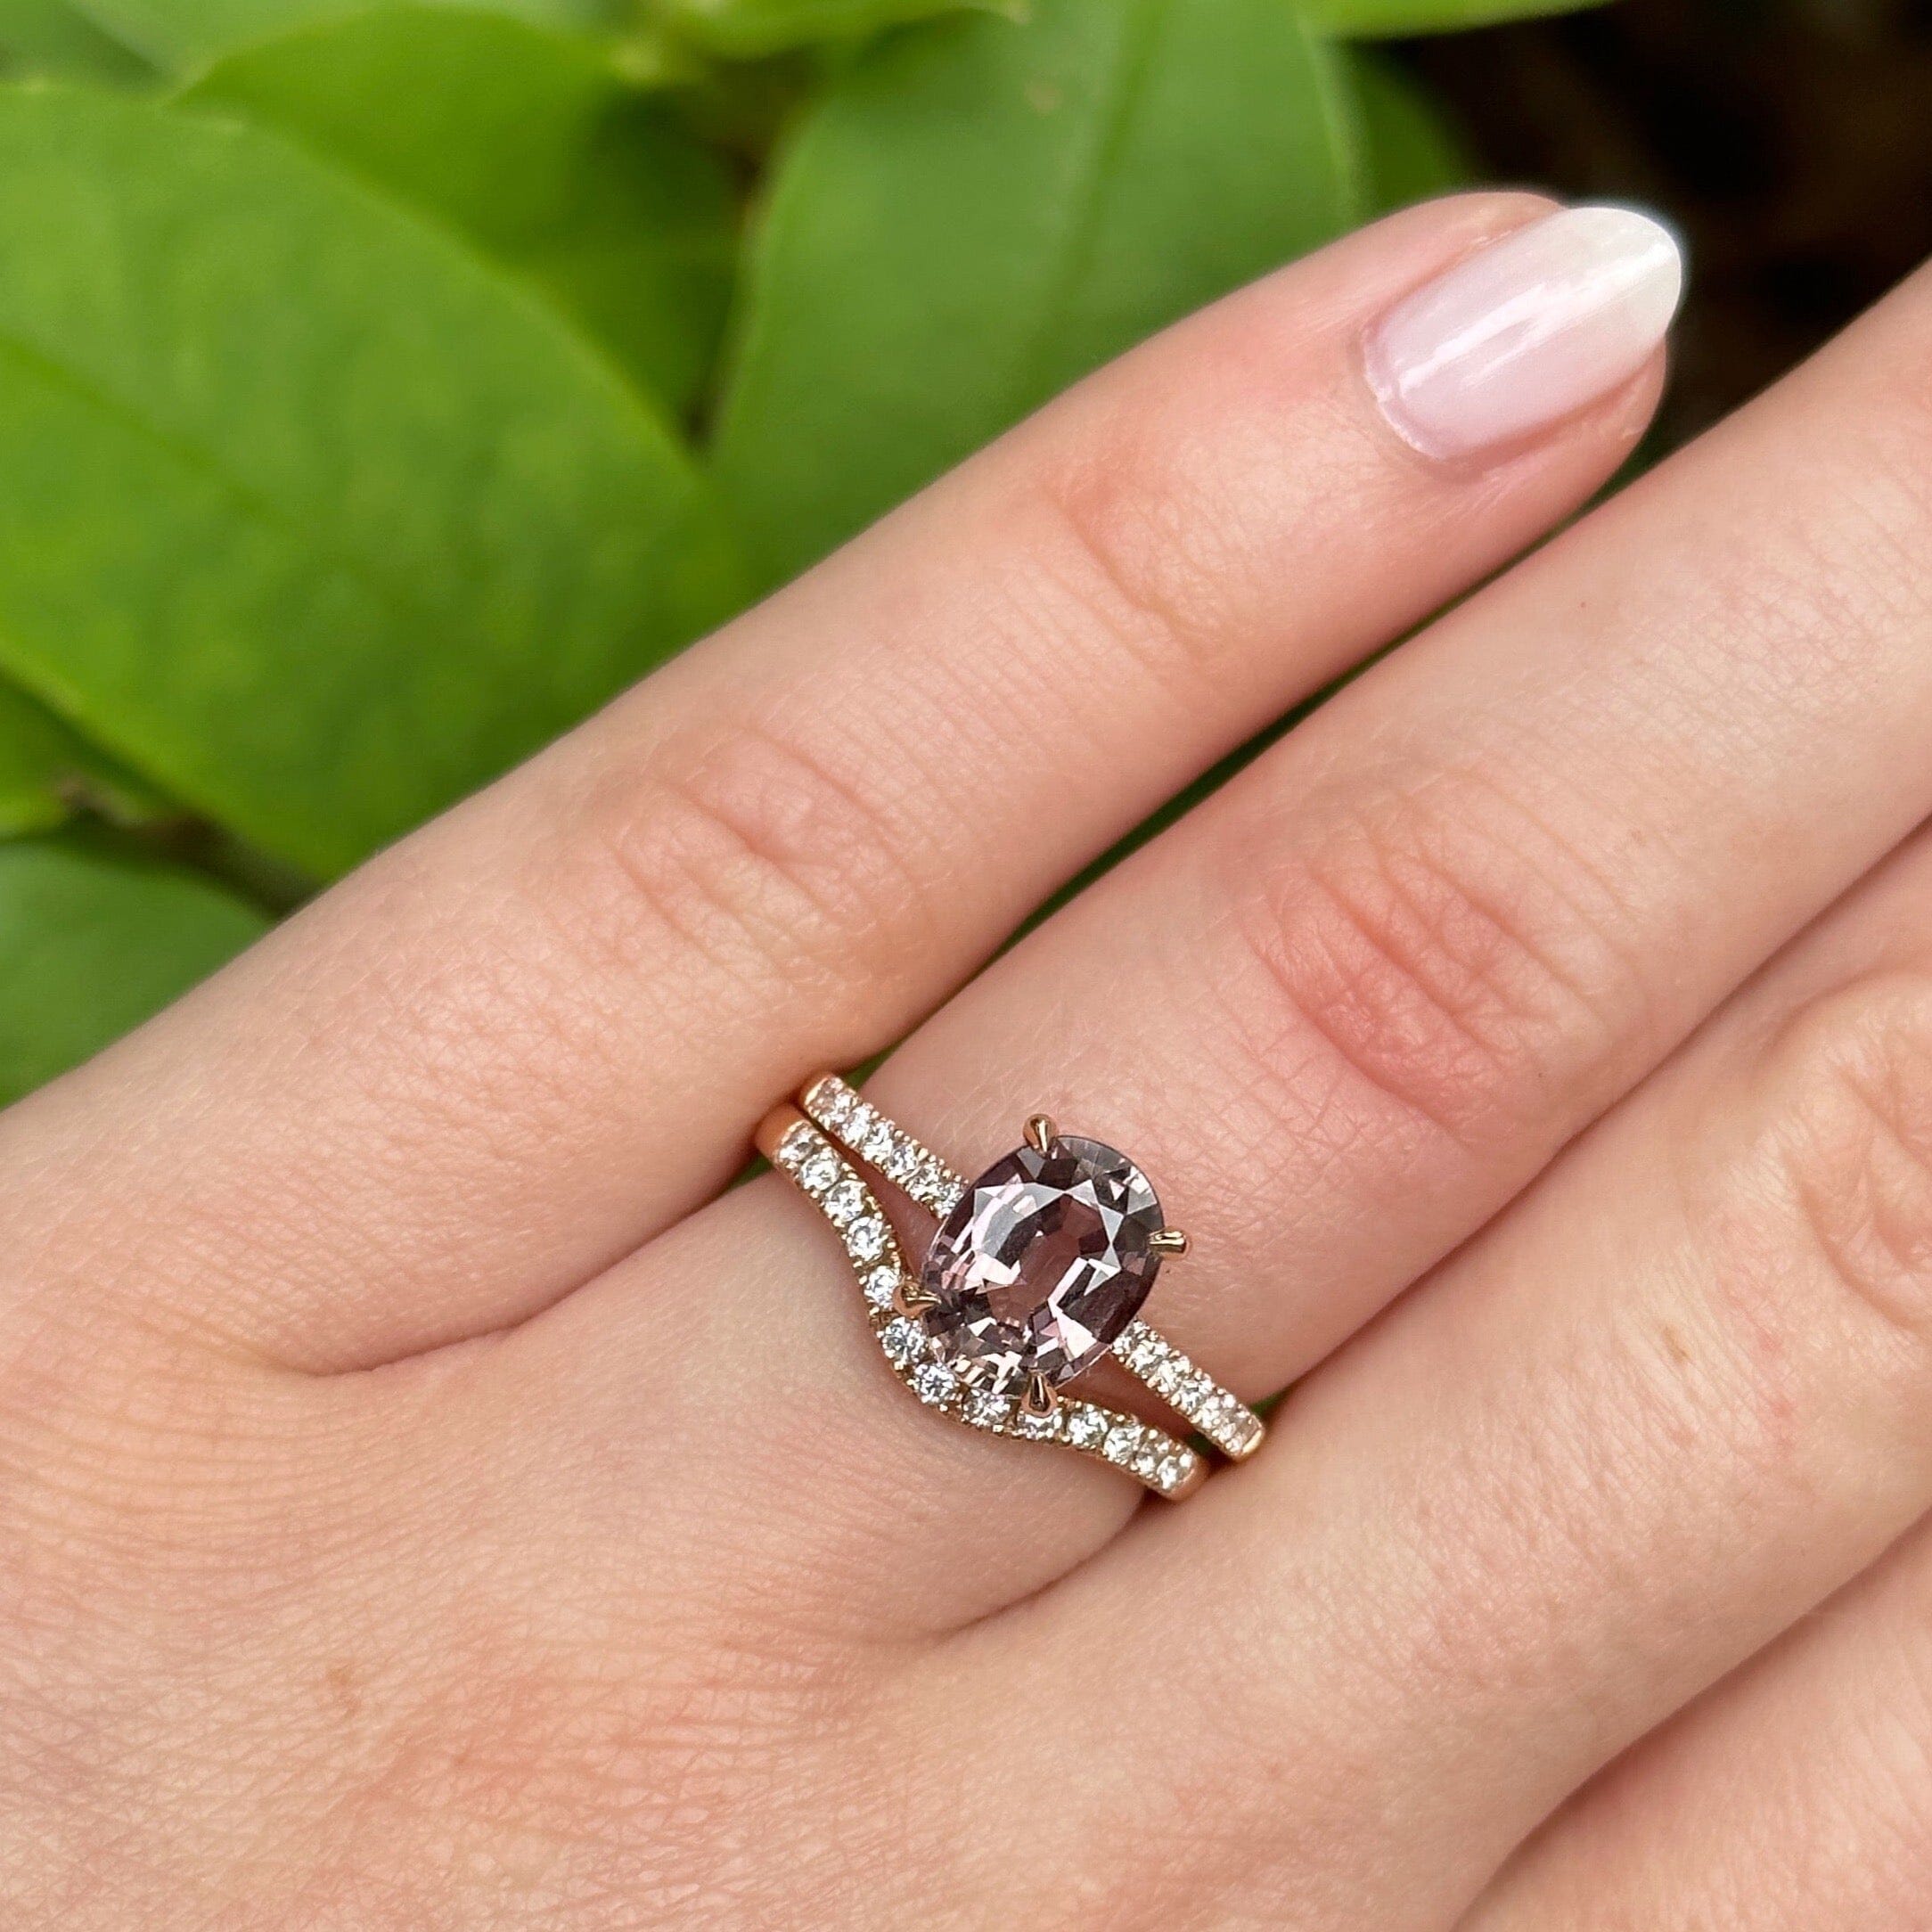 UNIQUFERANGER S925 plum-shaped blue and white wedding engagement diamond  ring is the best holiday gift for women (US size: 6-10) (6) | Amazon.com